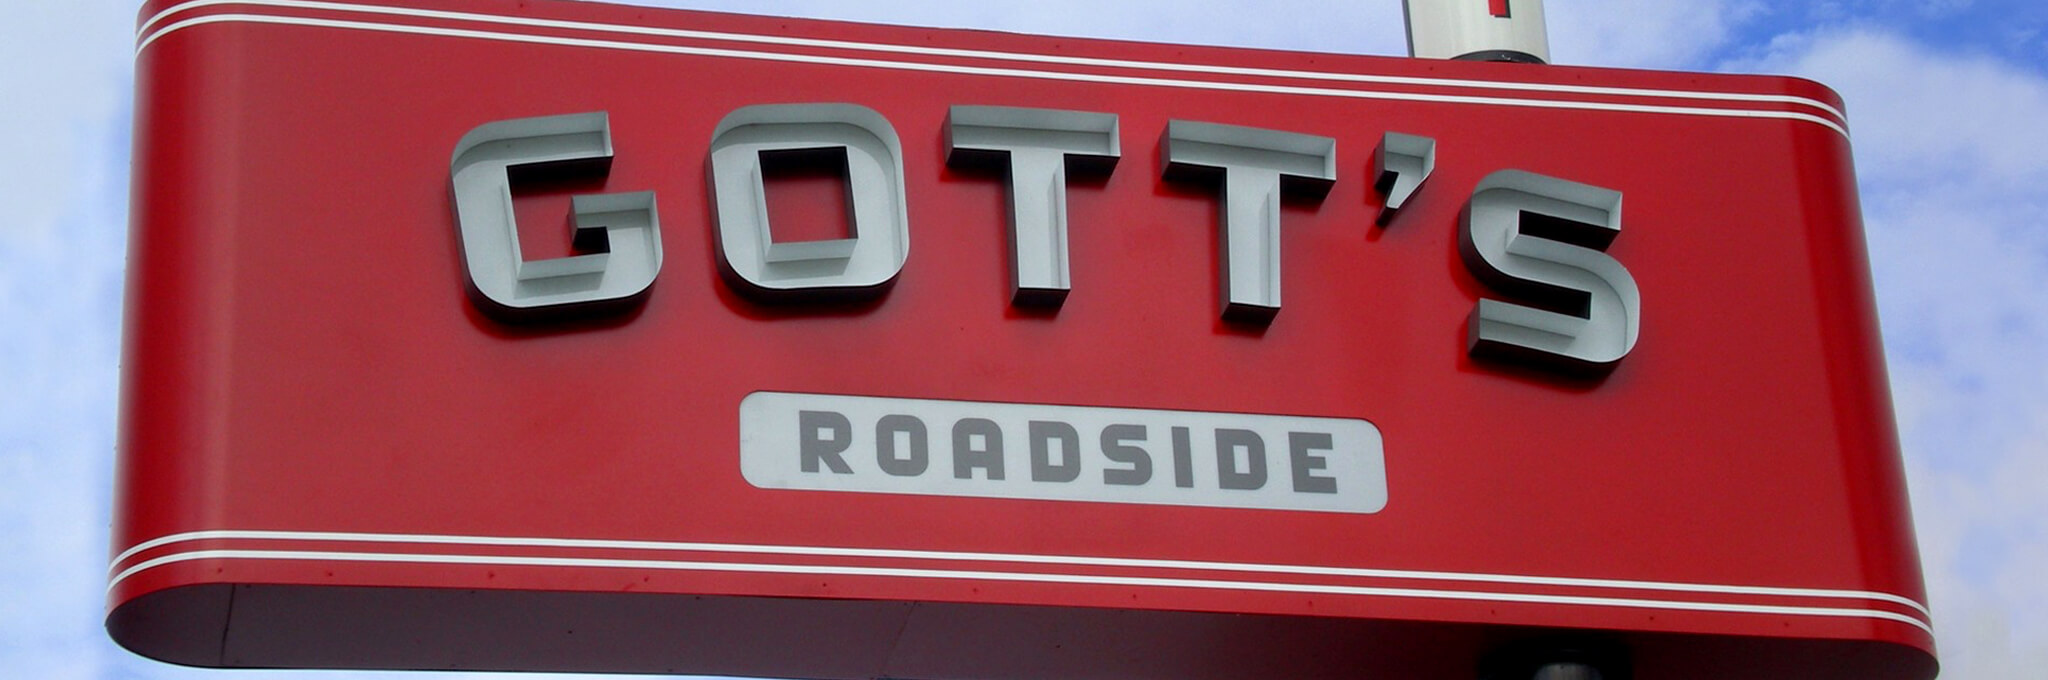 Large red Gott's Roadside signage